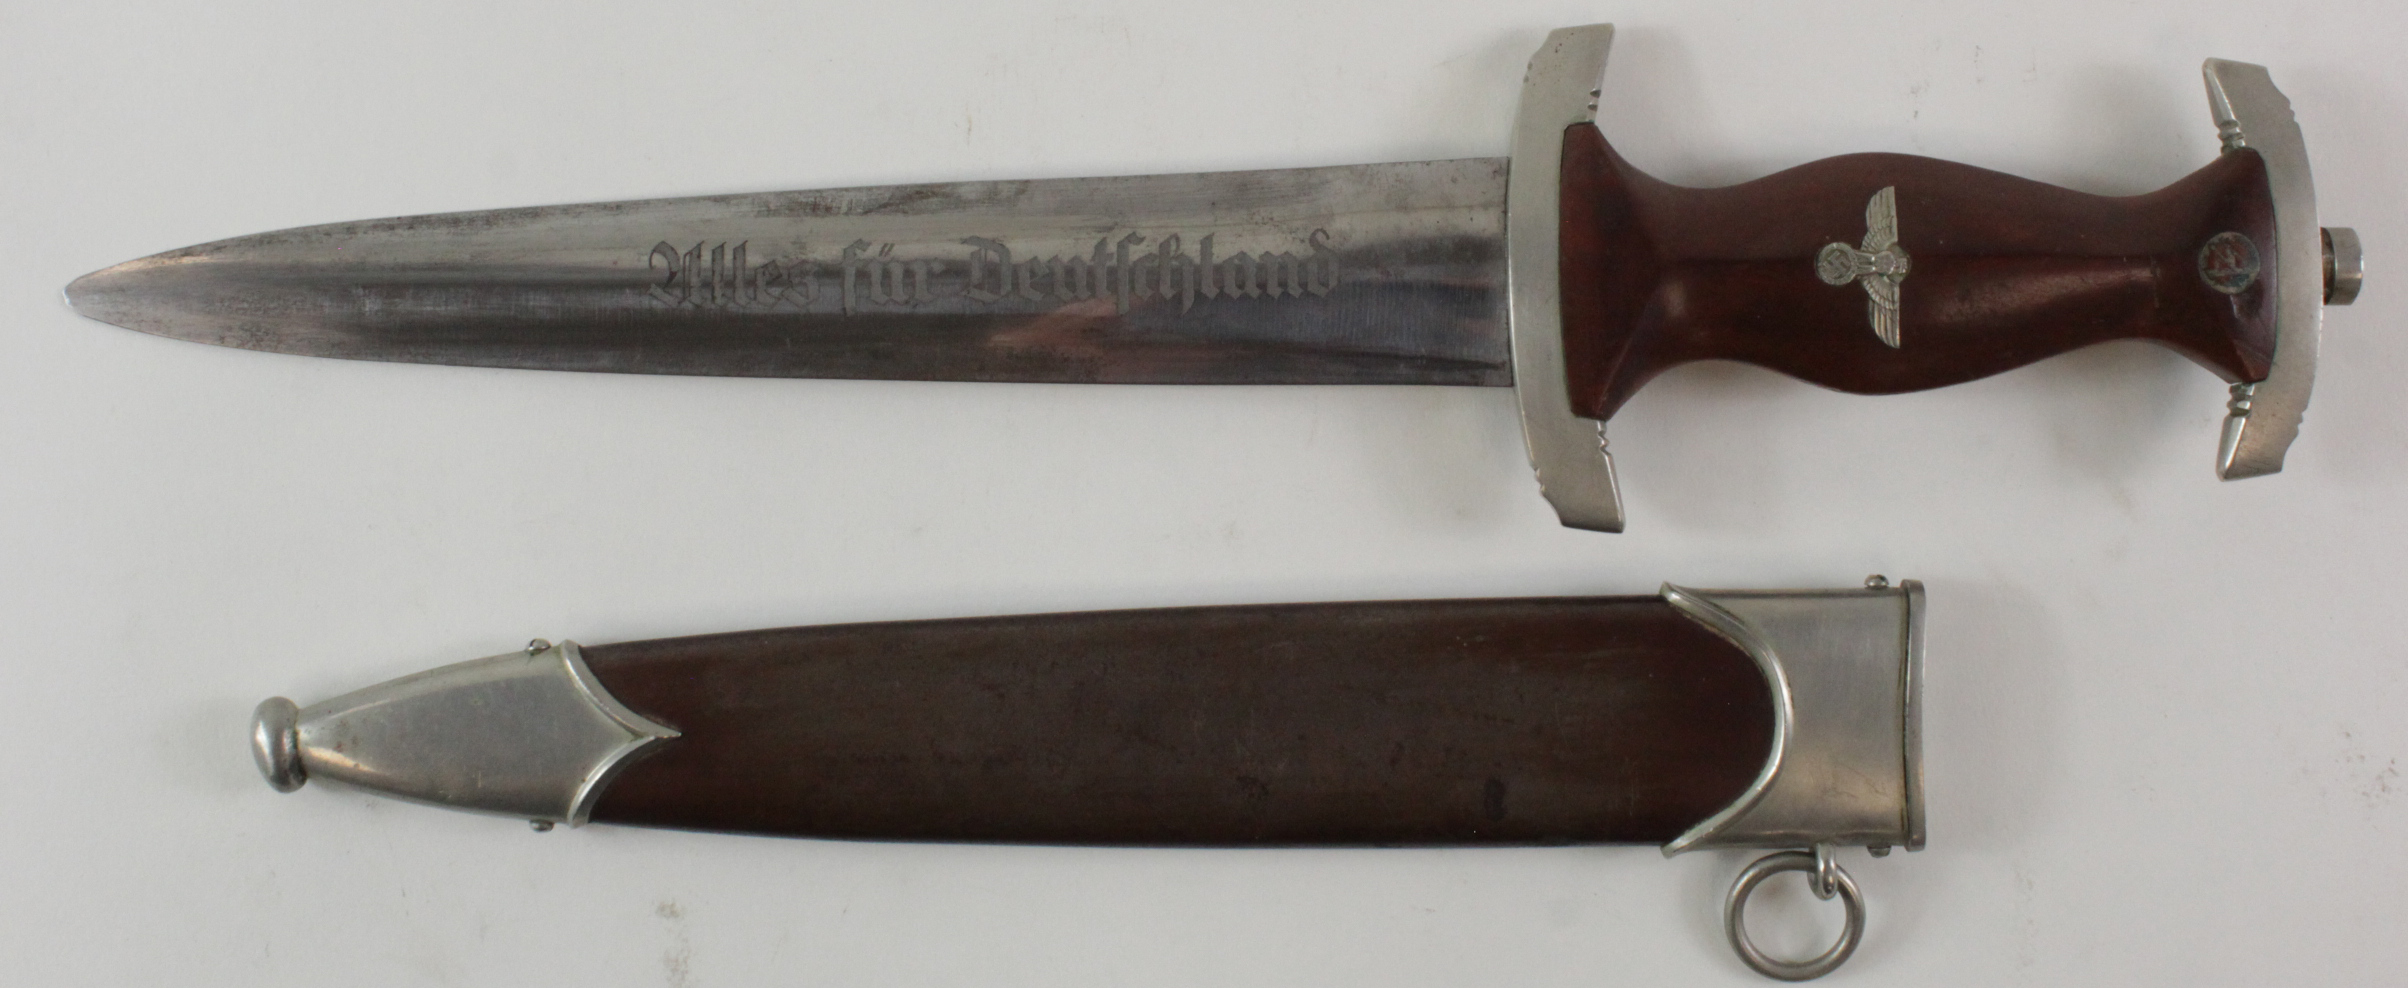 German WW2 SA Dagger with metal scabbard, blade maker marked 'Carl Schmidt Sohn A-G Solingen'. Blade